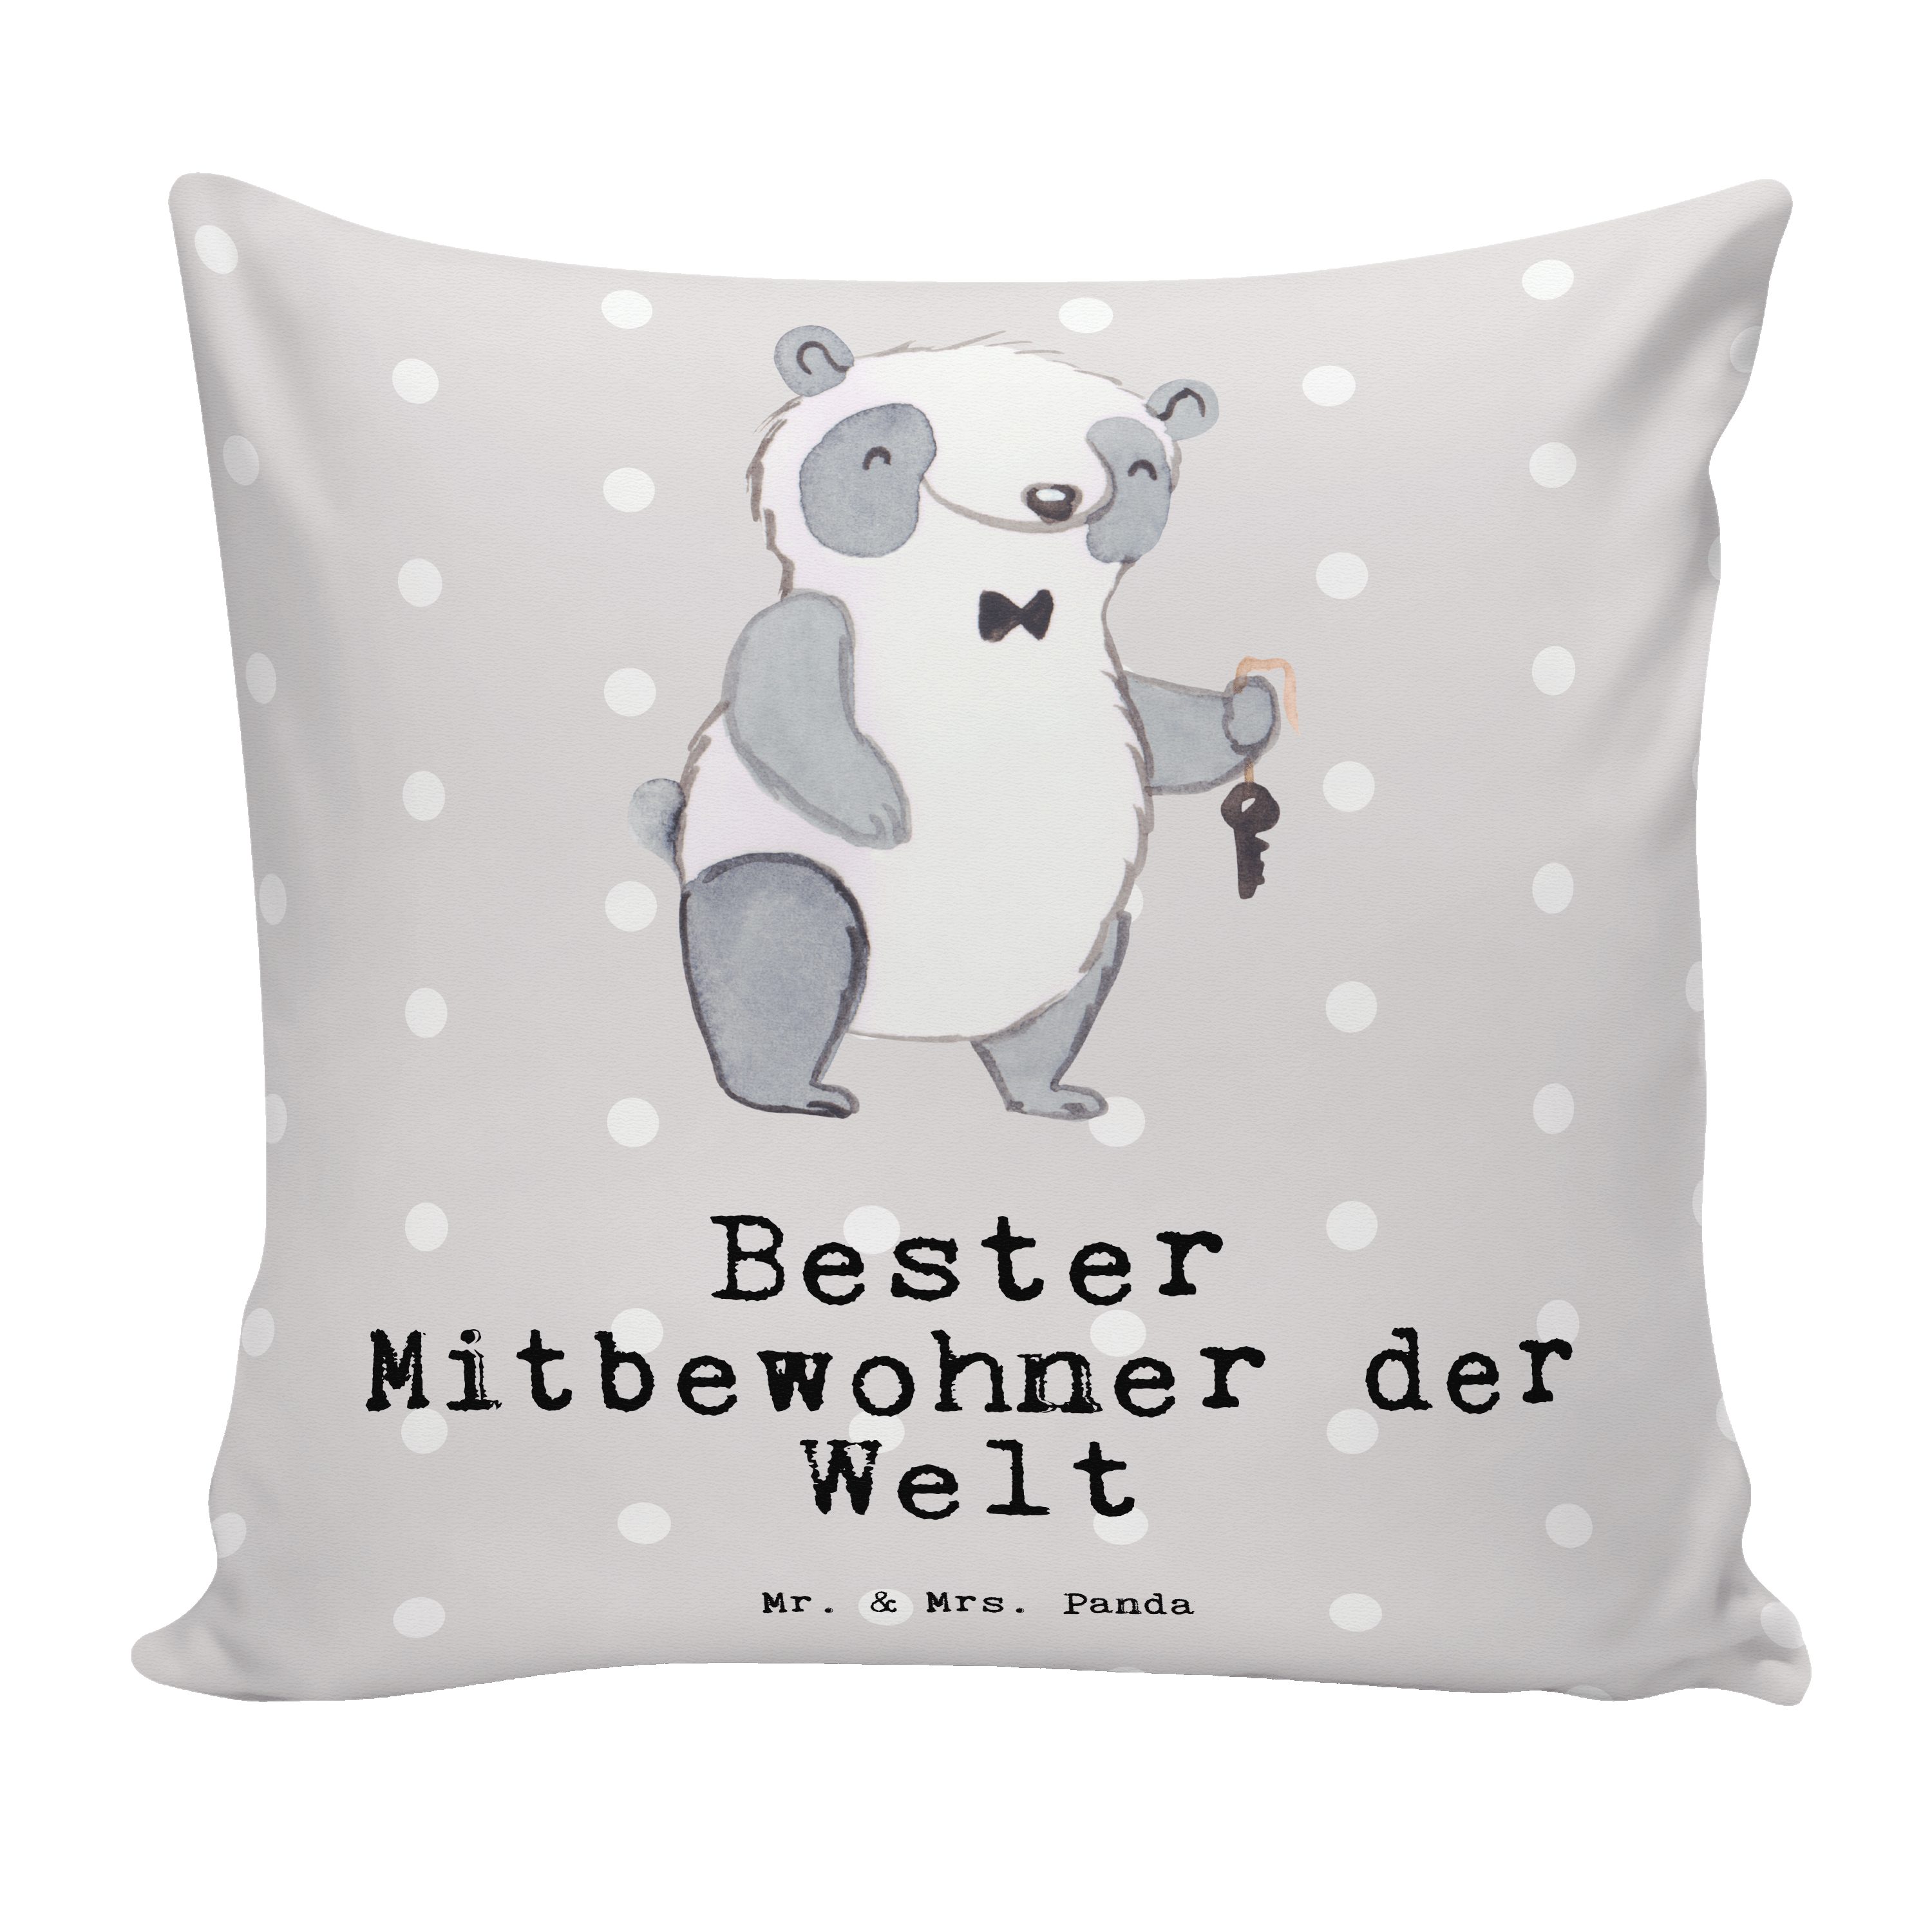 Dekokissen & Mrs. - Sofakiss Welt Geschenk, Pastell der Panda Mitbewohner Panda Grau - Bester Mr.